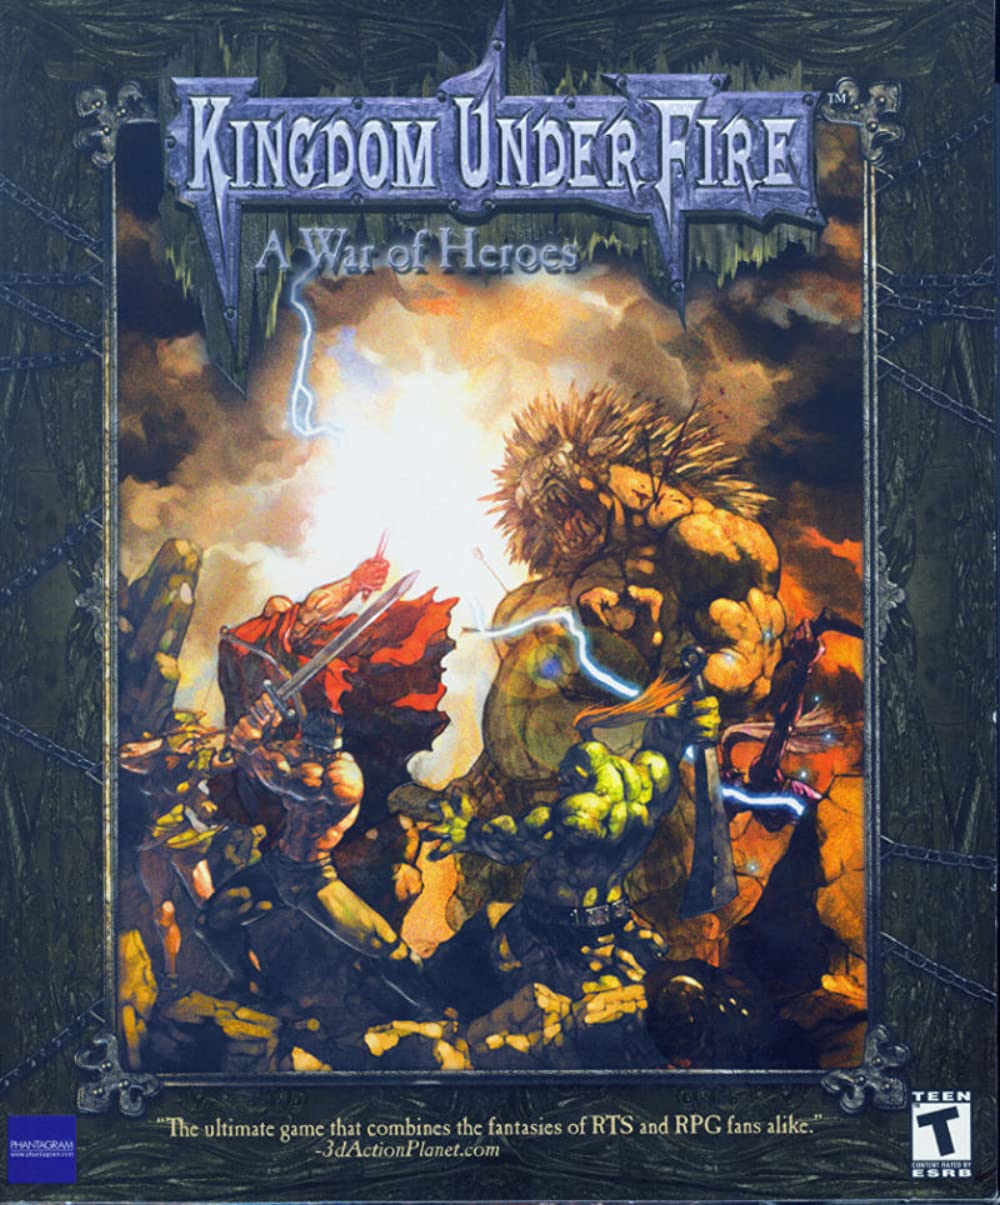 Download Kingdom Under Fire: A War of Heroes Movie | Kingdom Under Fire: A War Of Heroes Review